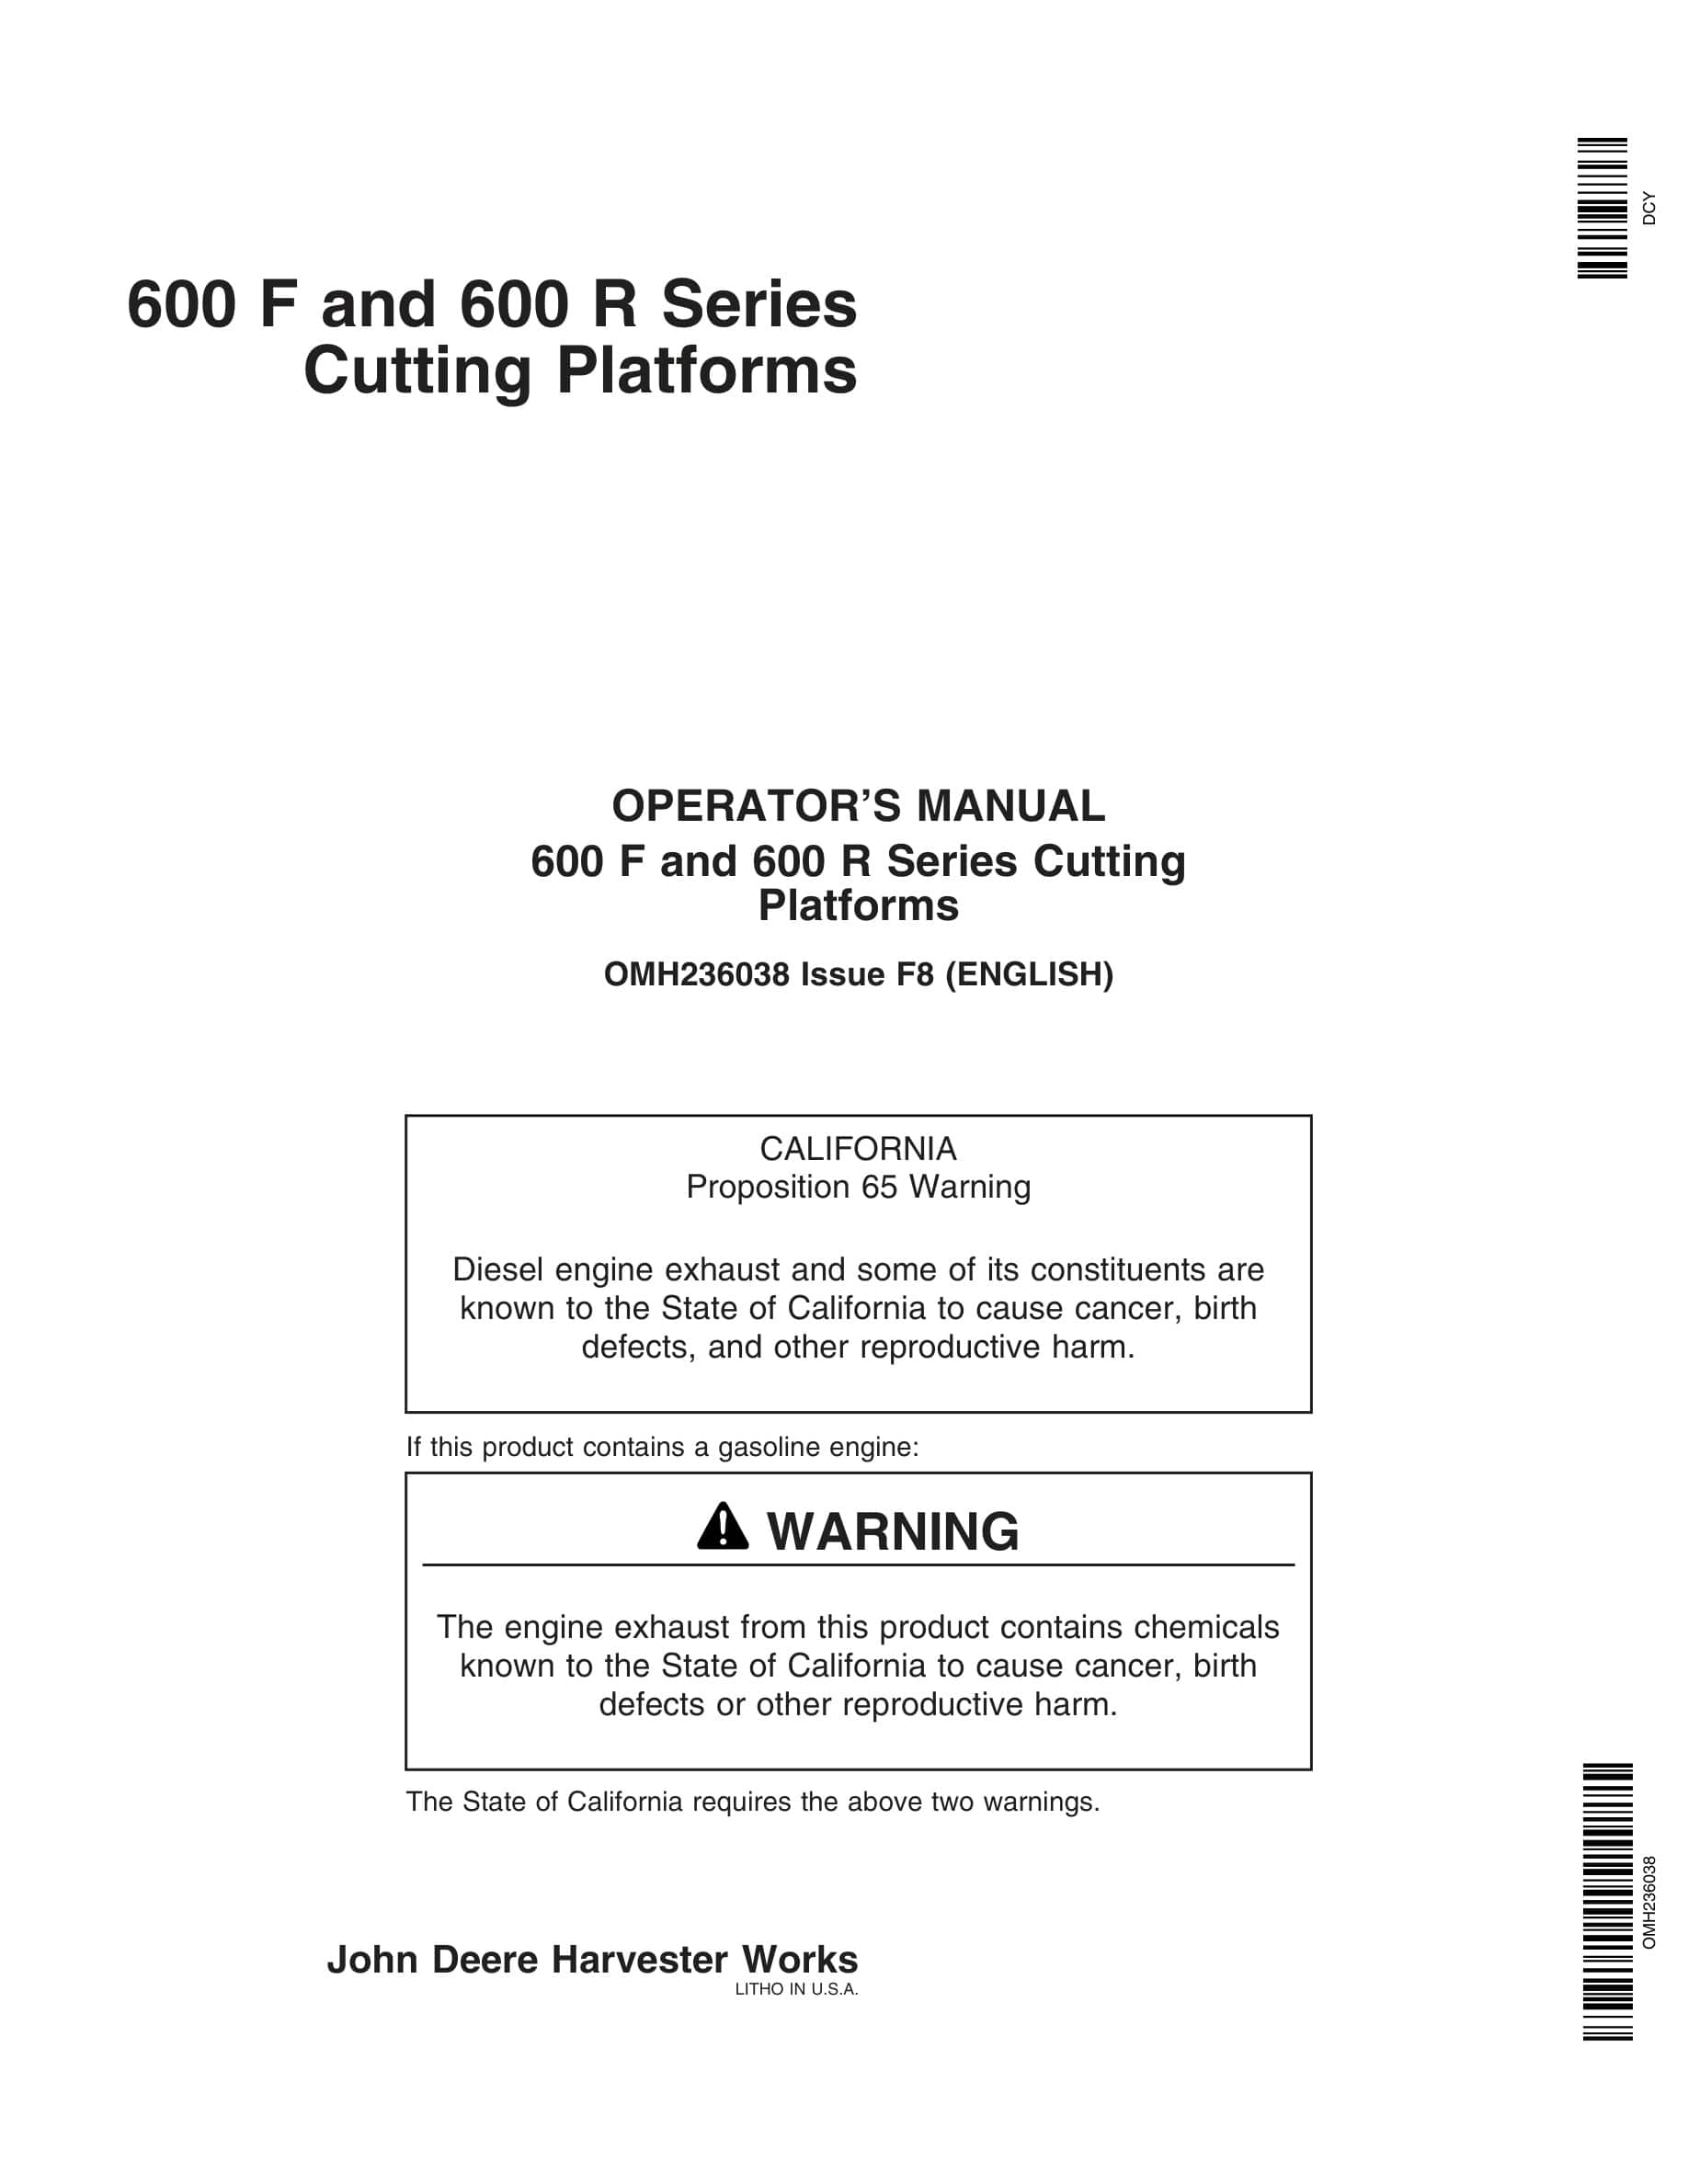 John Deere 600 F and 600 R Series Cutting Platforms Operator Manual OMH236038-1